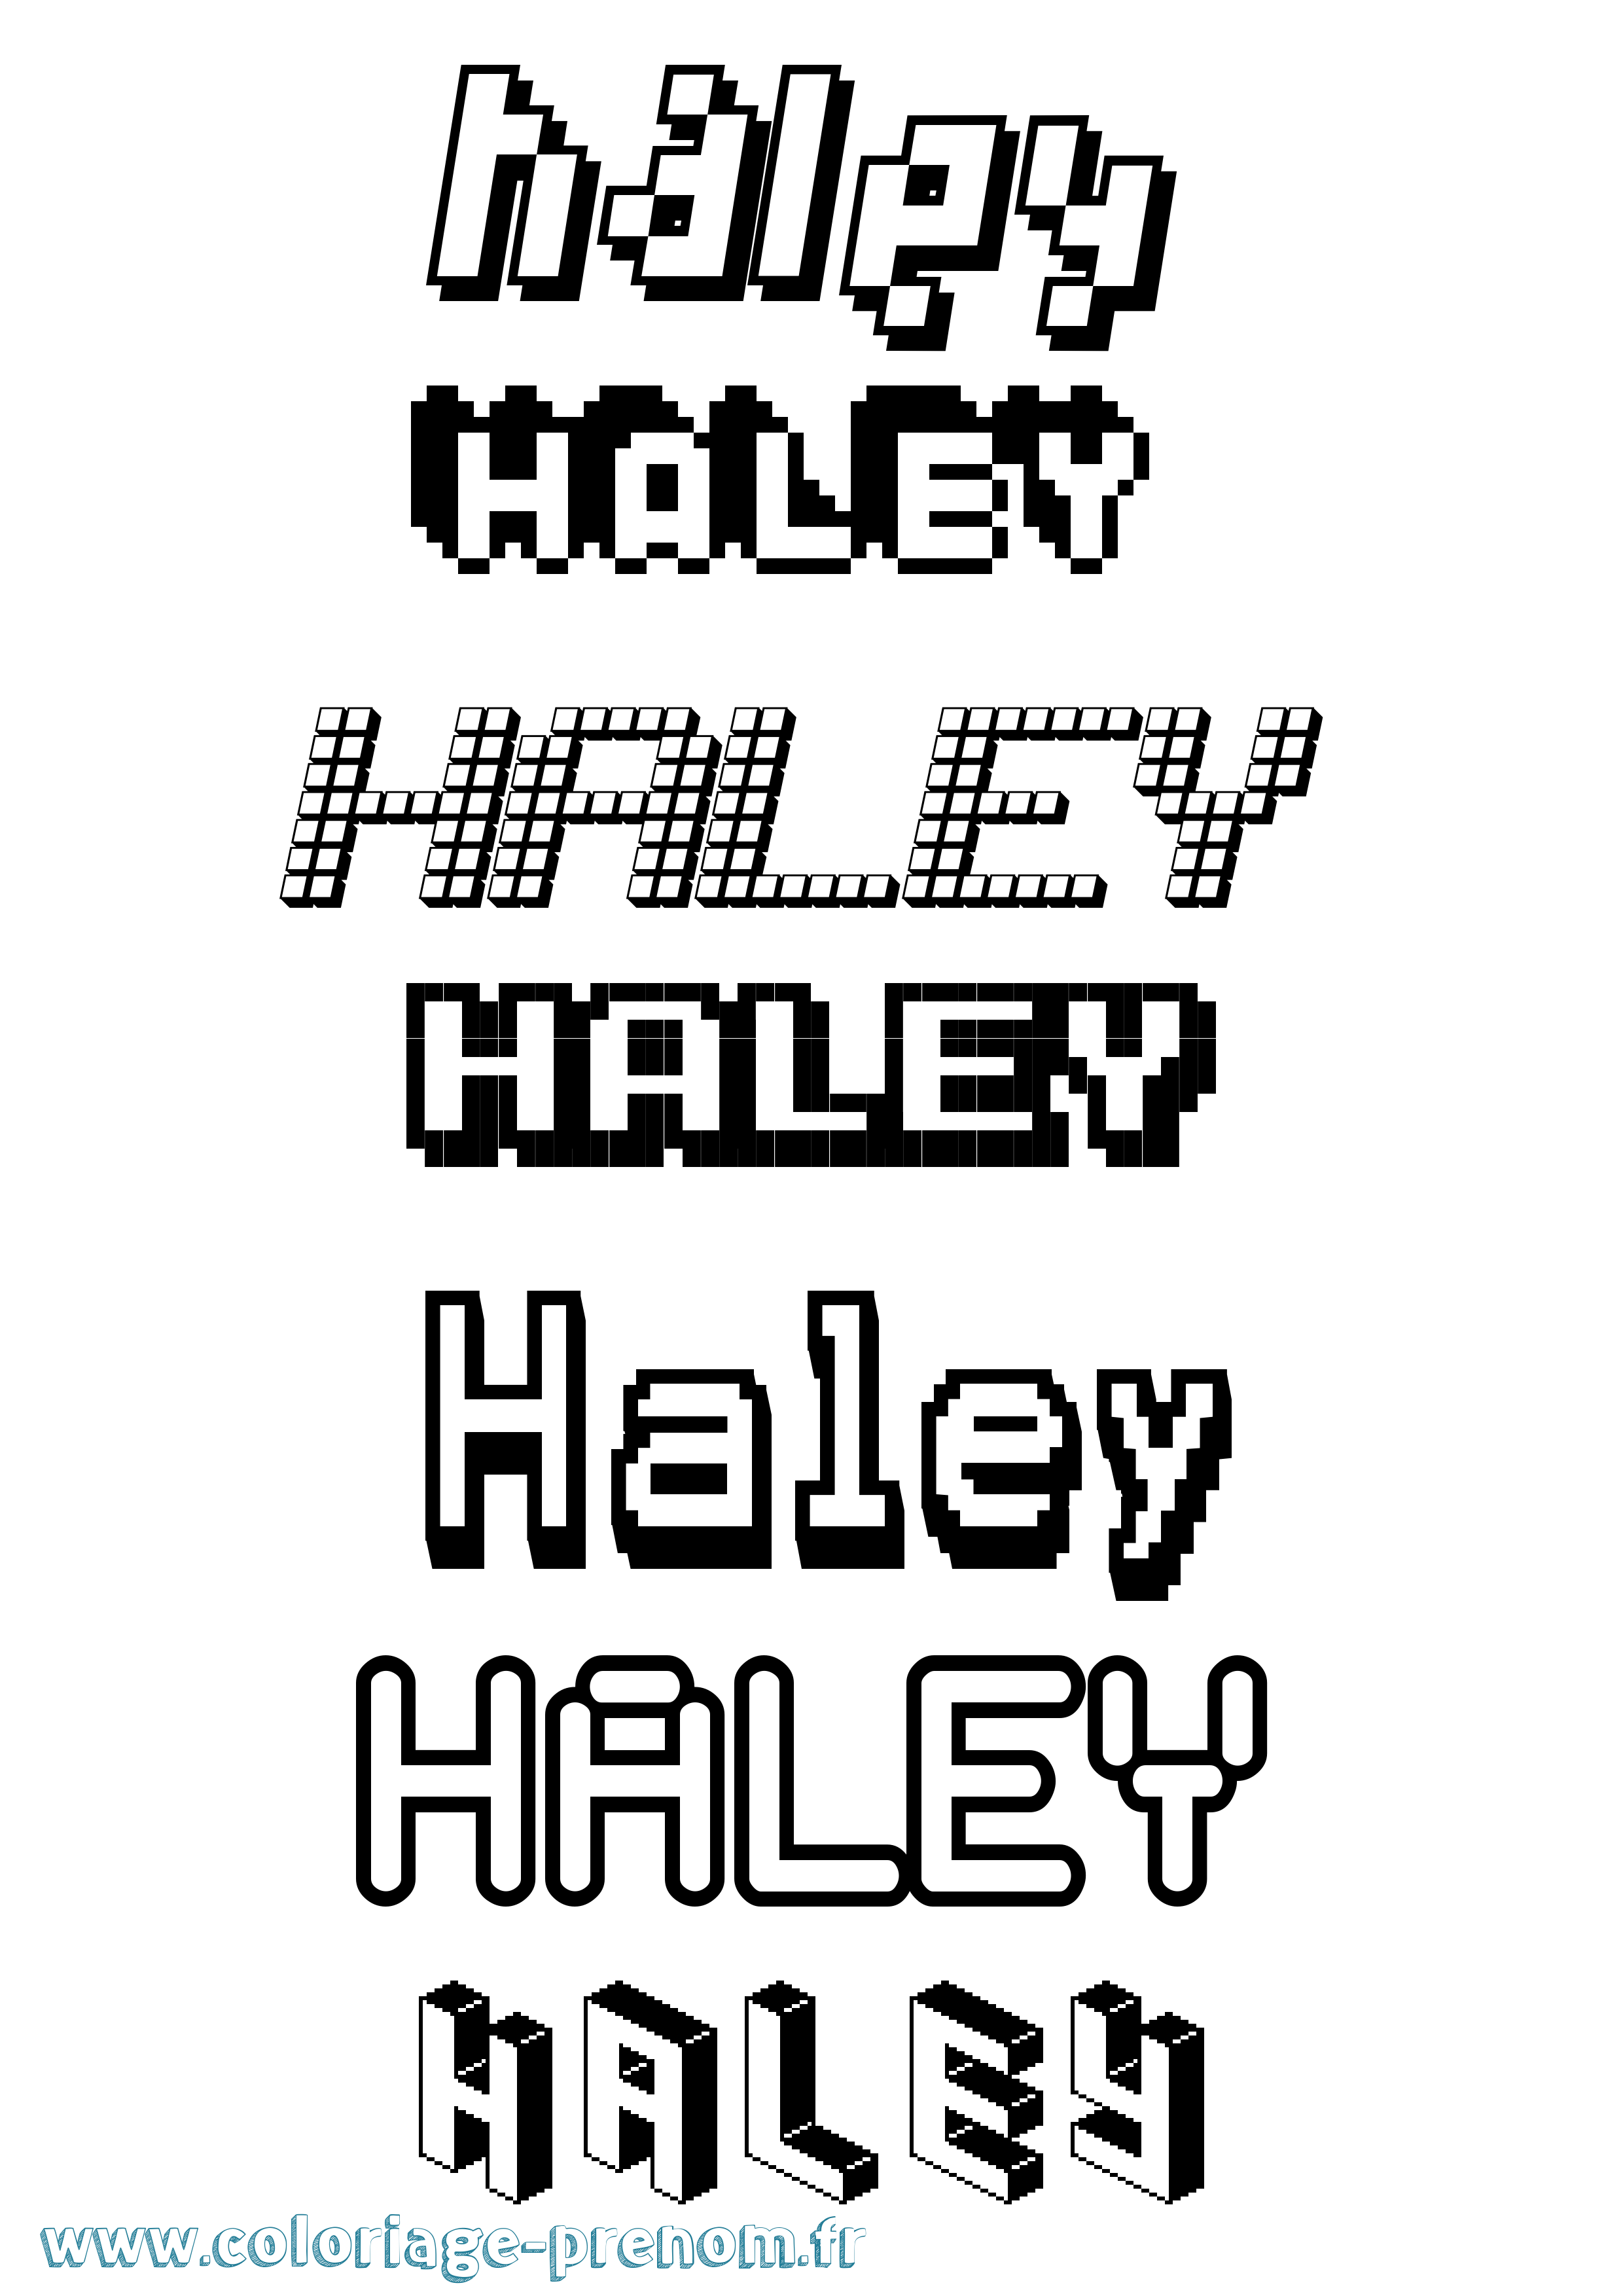 Coloriage prénom Haley Pixel